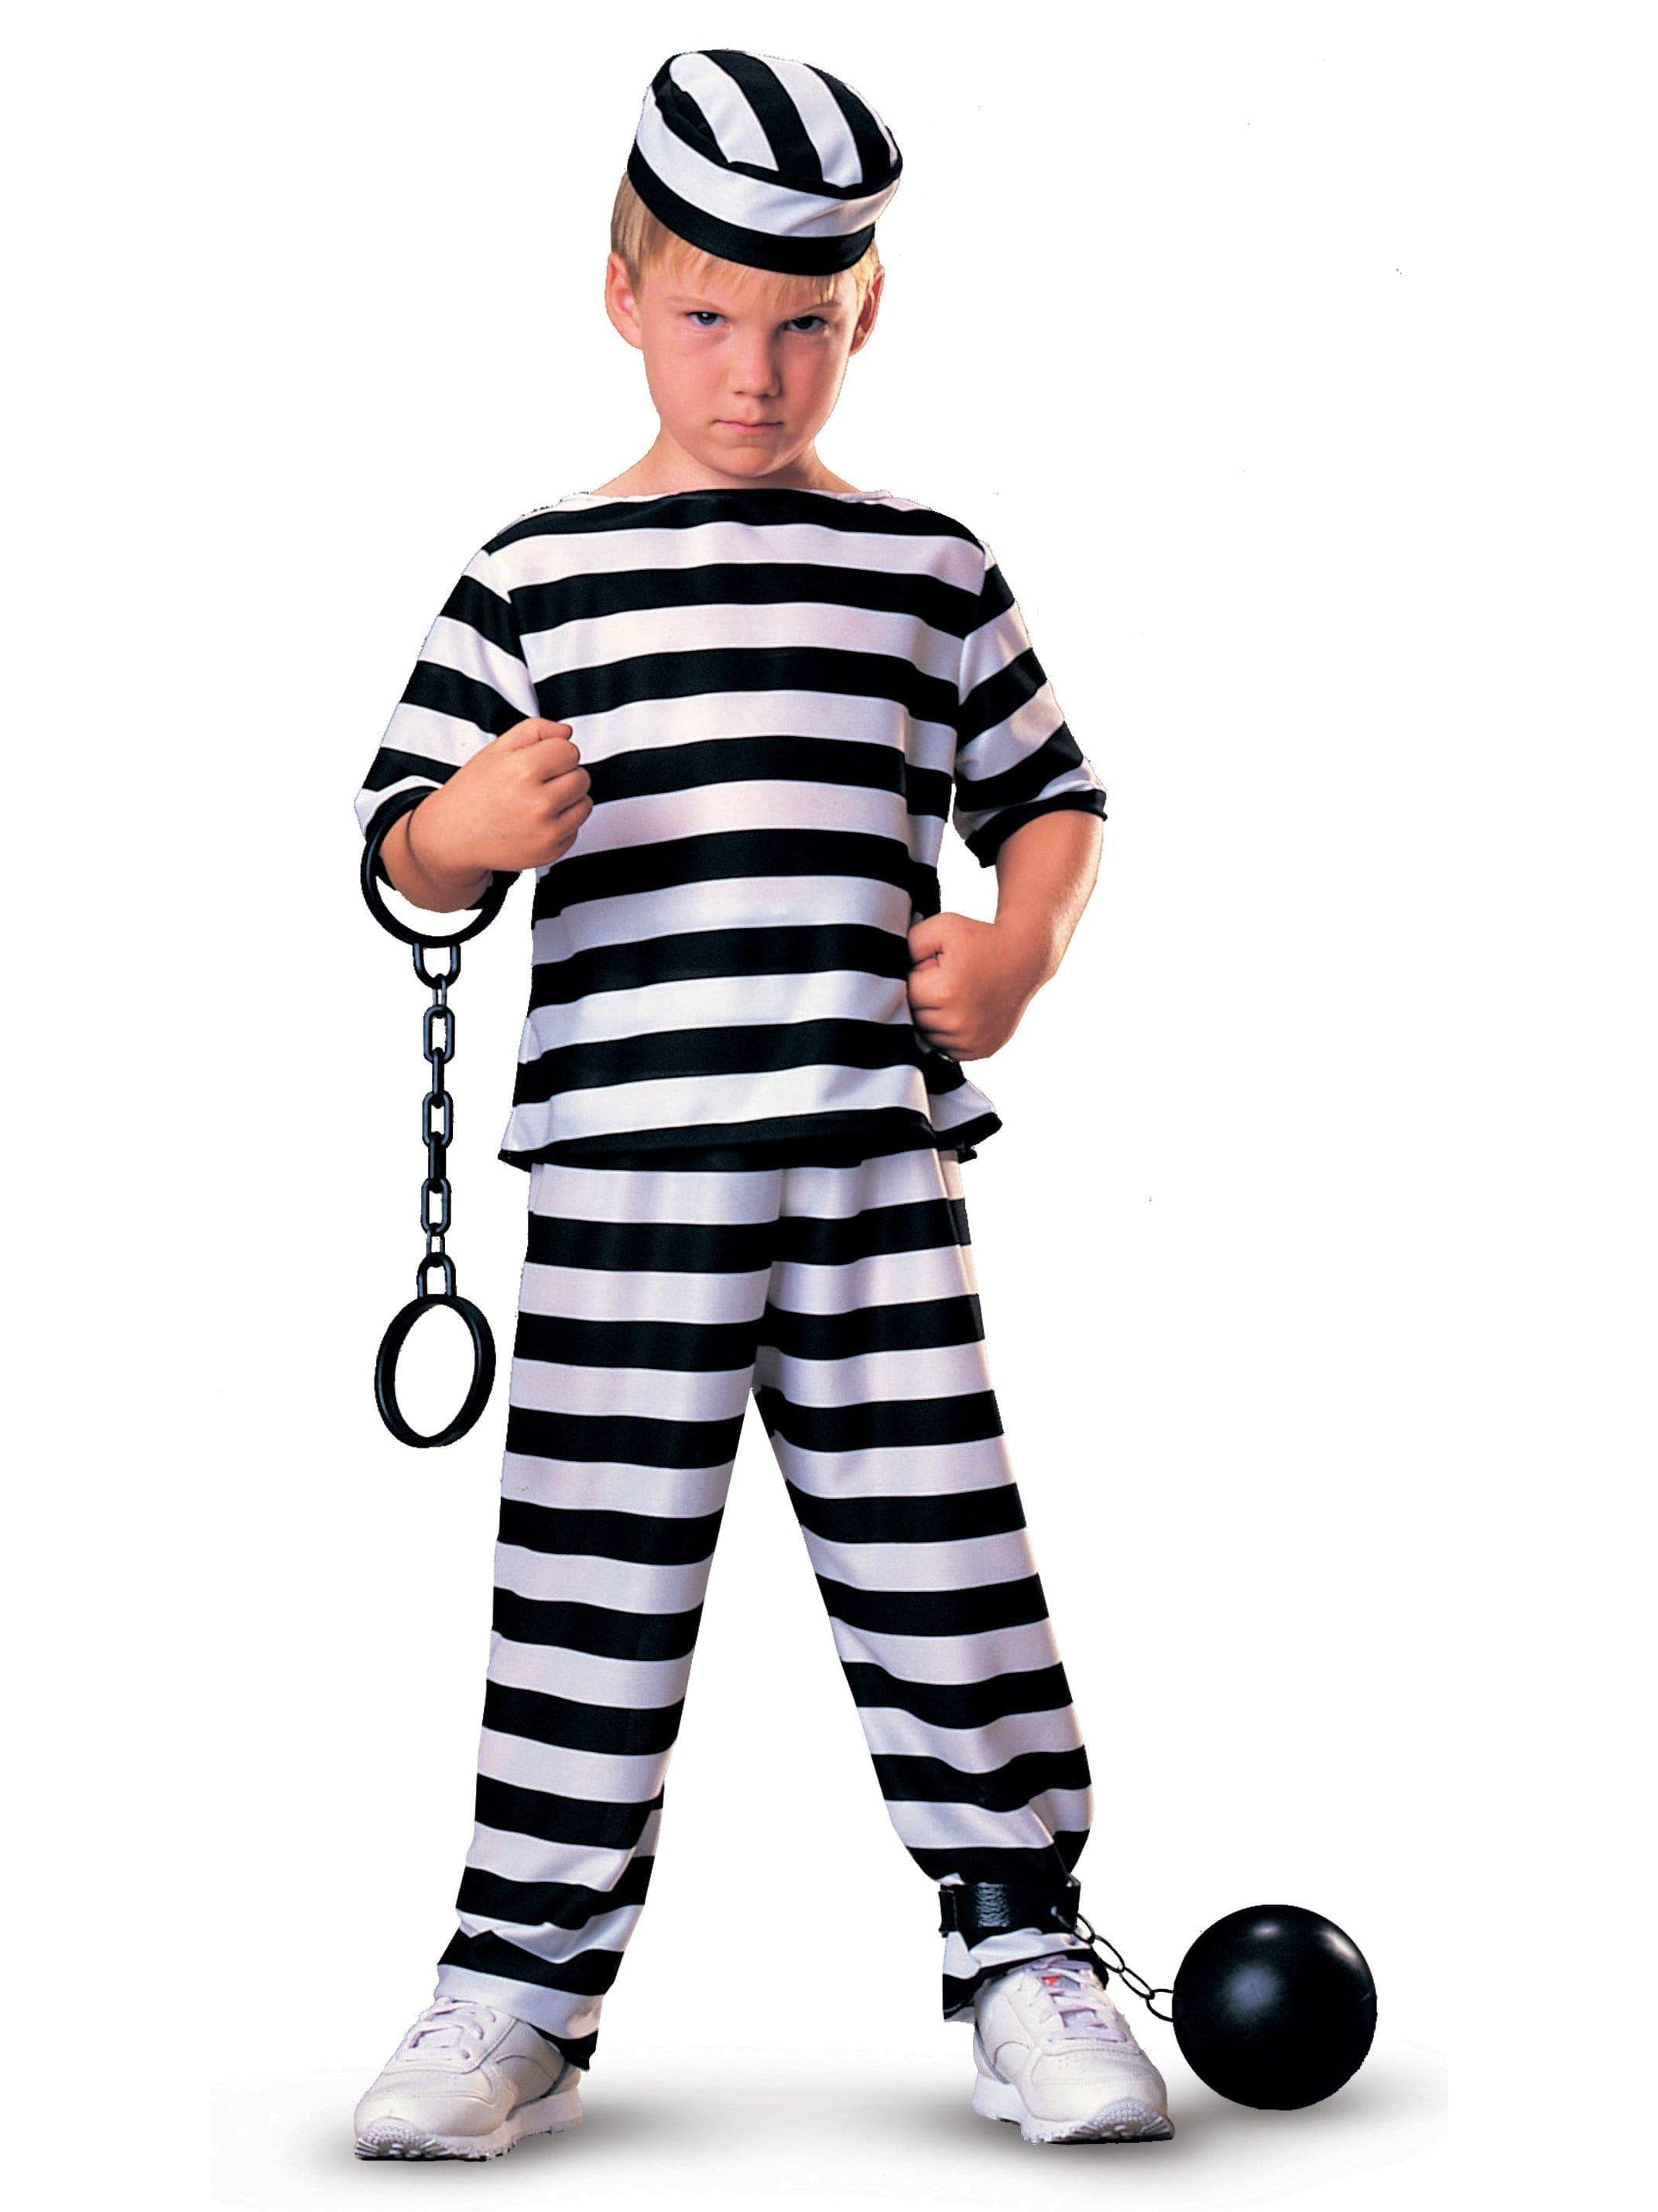 Kids' Black and White Striped Jailbird Costume - costumes.com